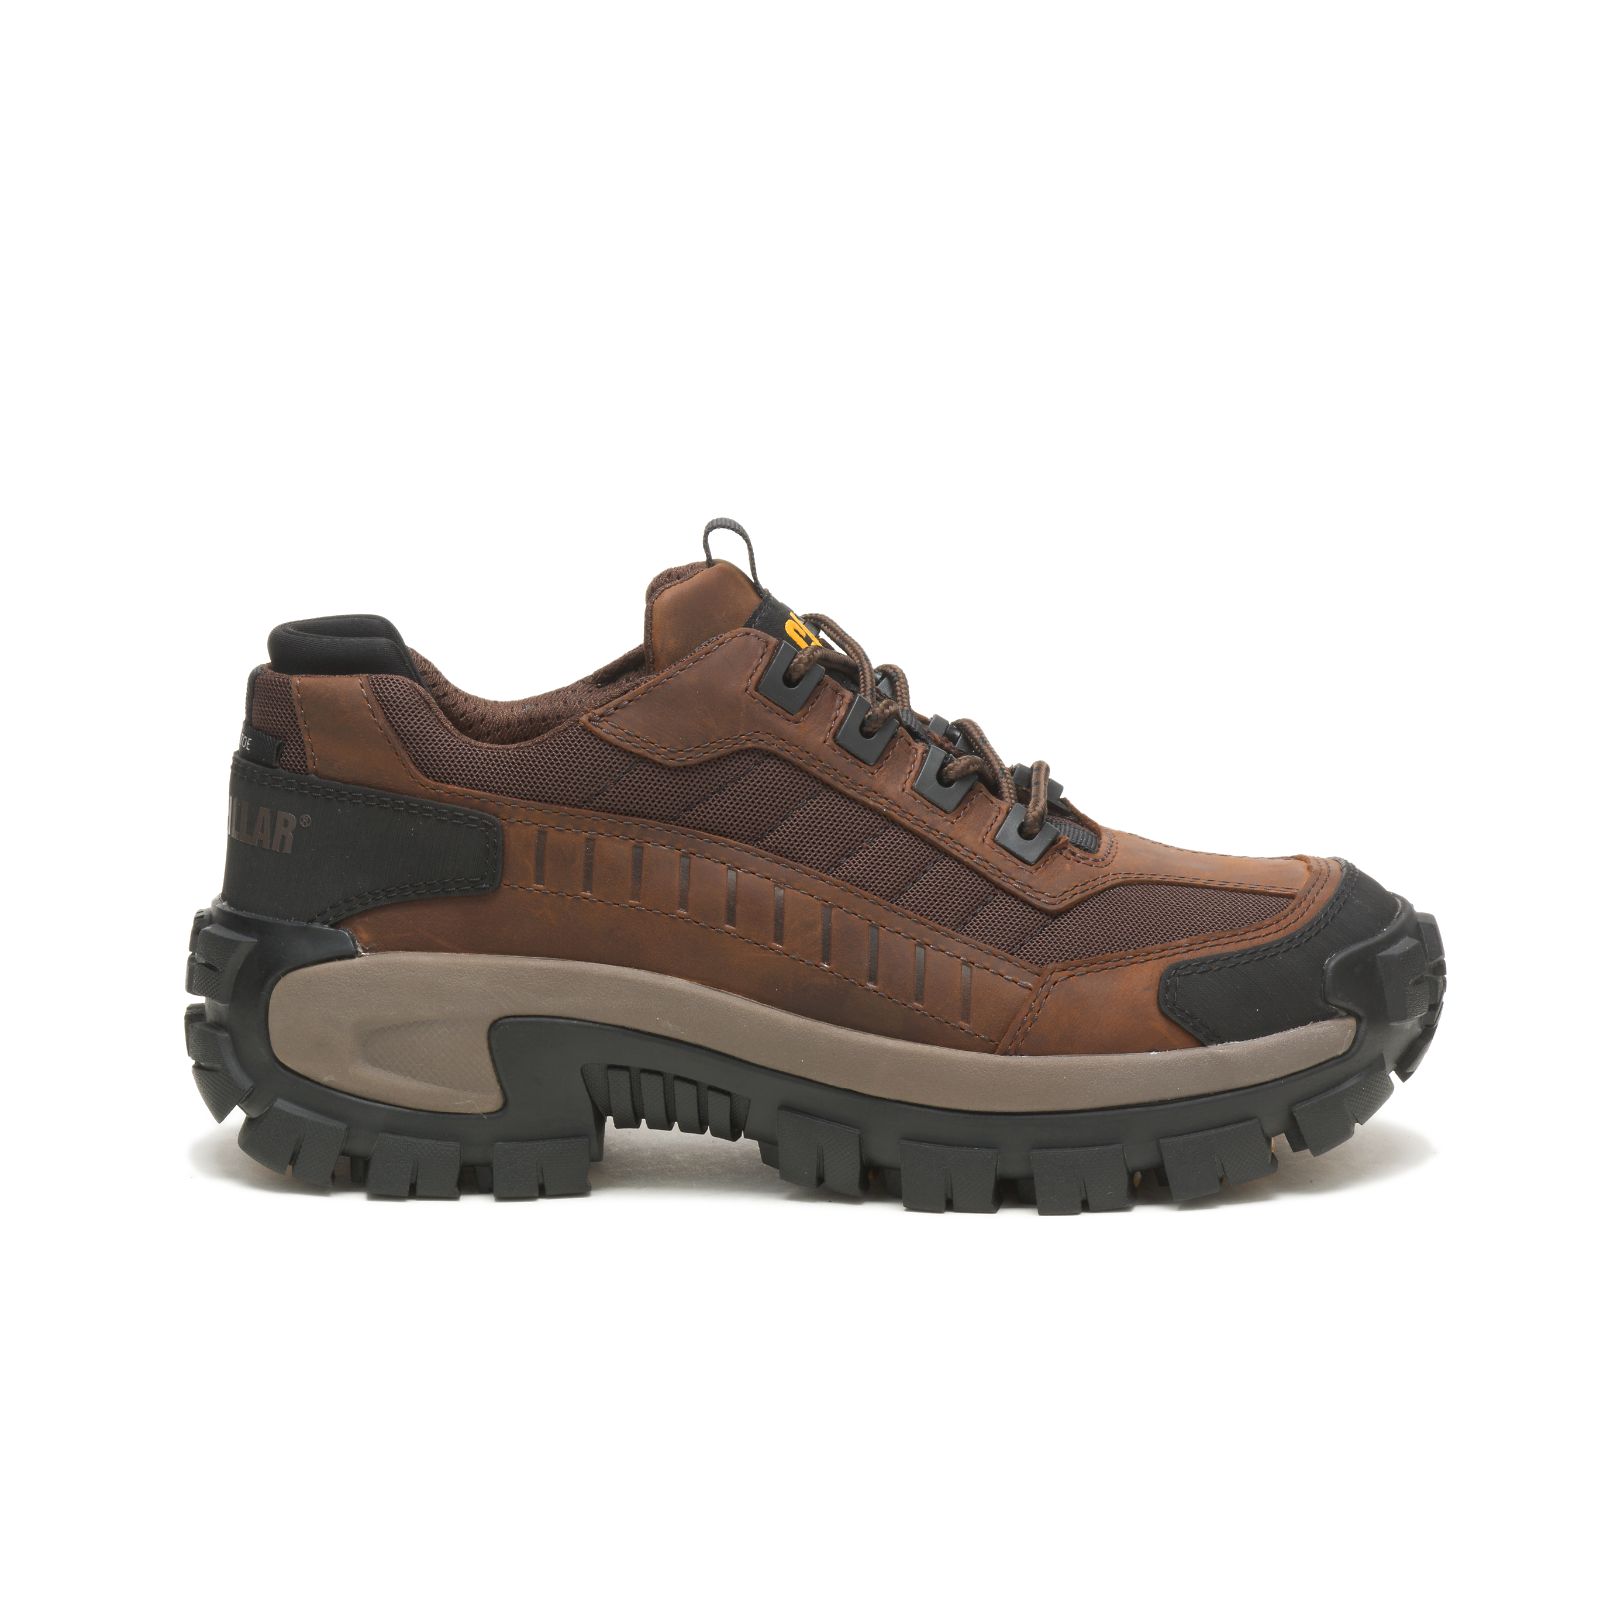 Caterpillar Steel Toe Shoes Online UAE - Caterpillar Invader Steel Toe Mens - Dark Brown QIDTWZ930